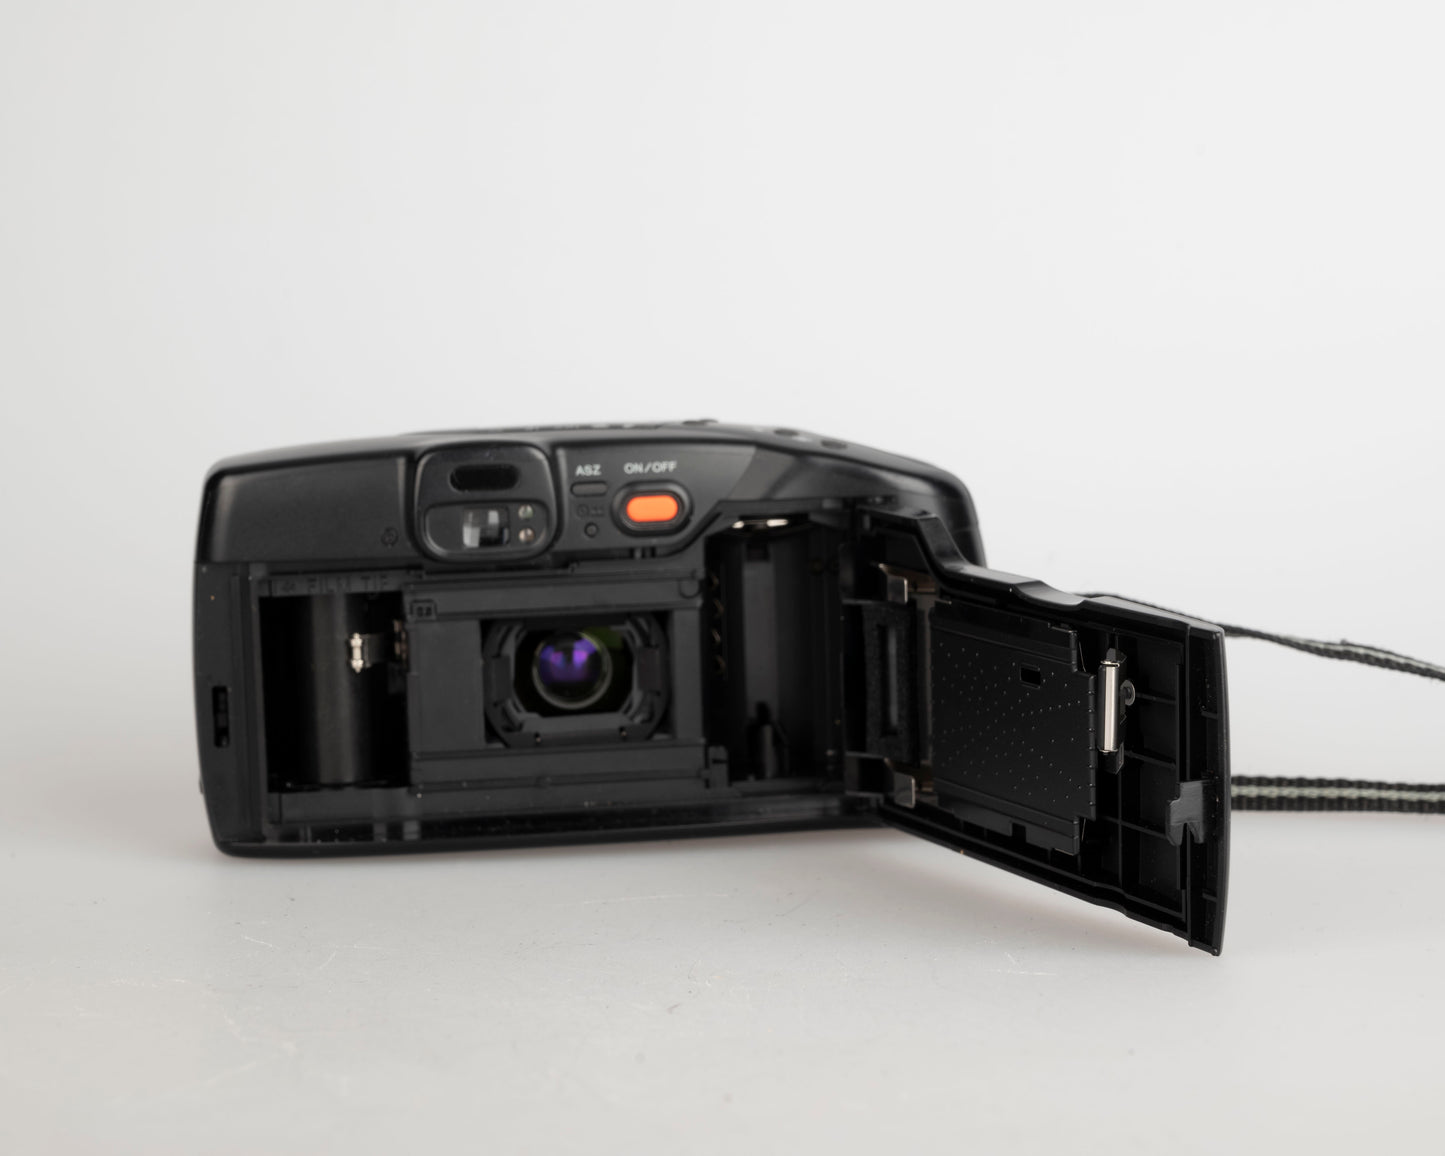 Minolta Freedom Zoom 90EX 35mm film camera (serial 92346568)